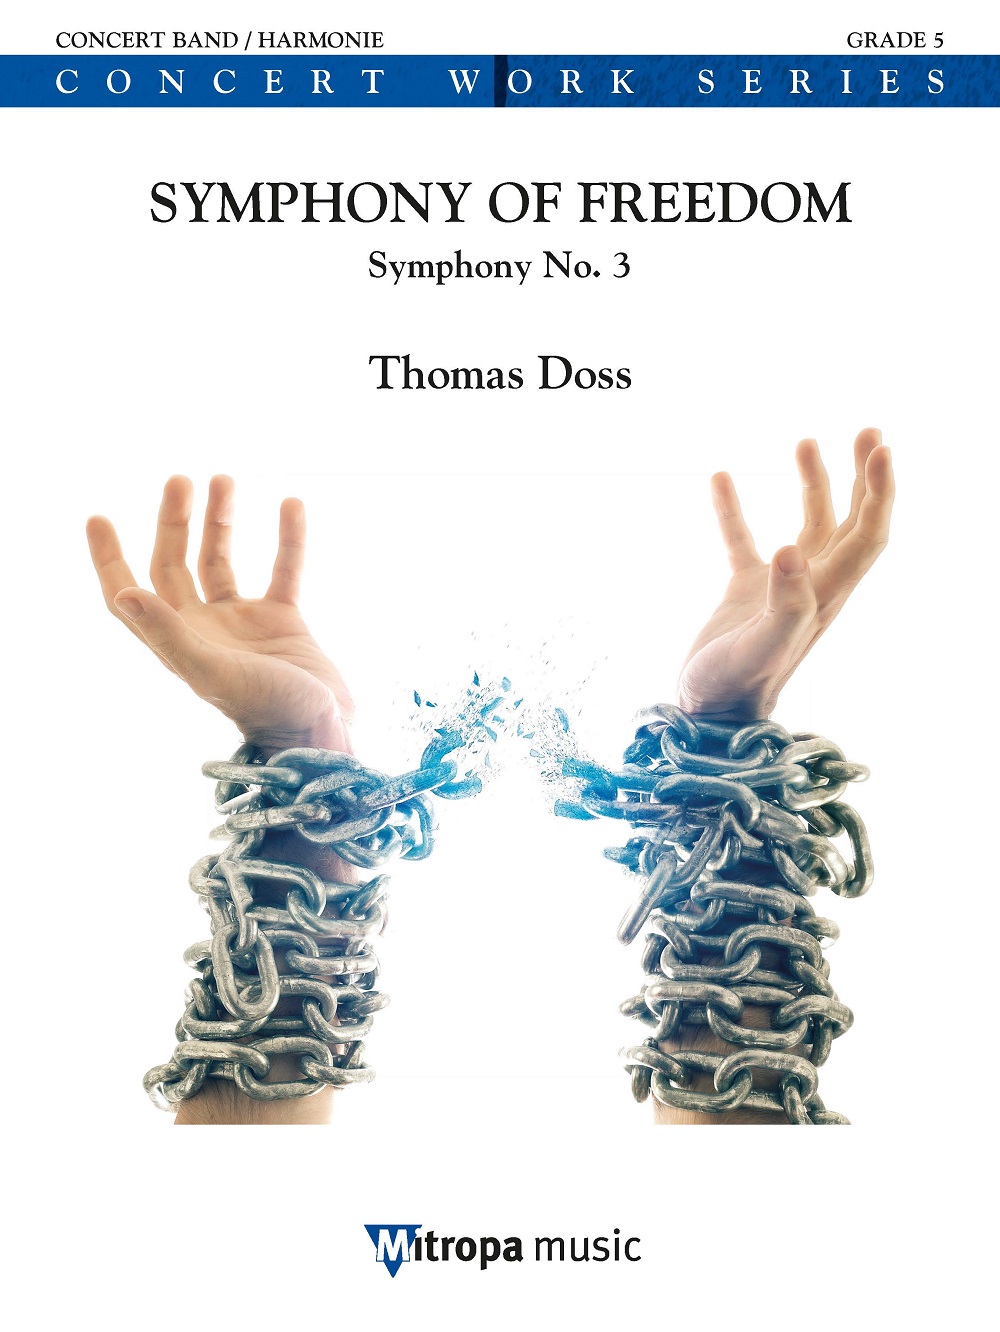 Thomas Doss: Symphony of Freedom